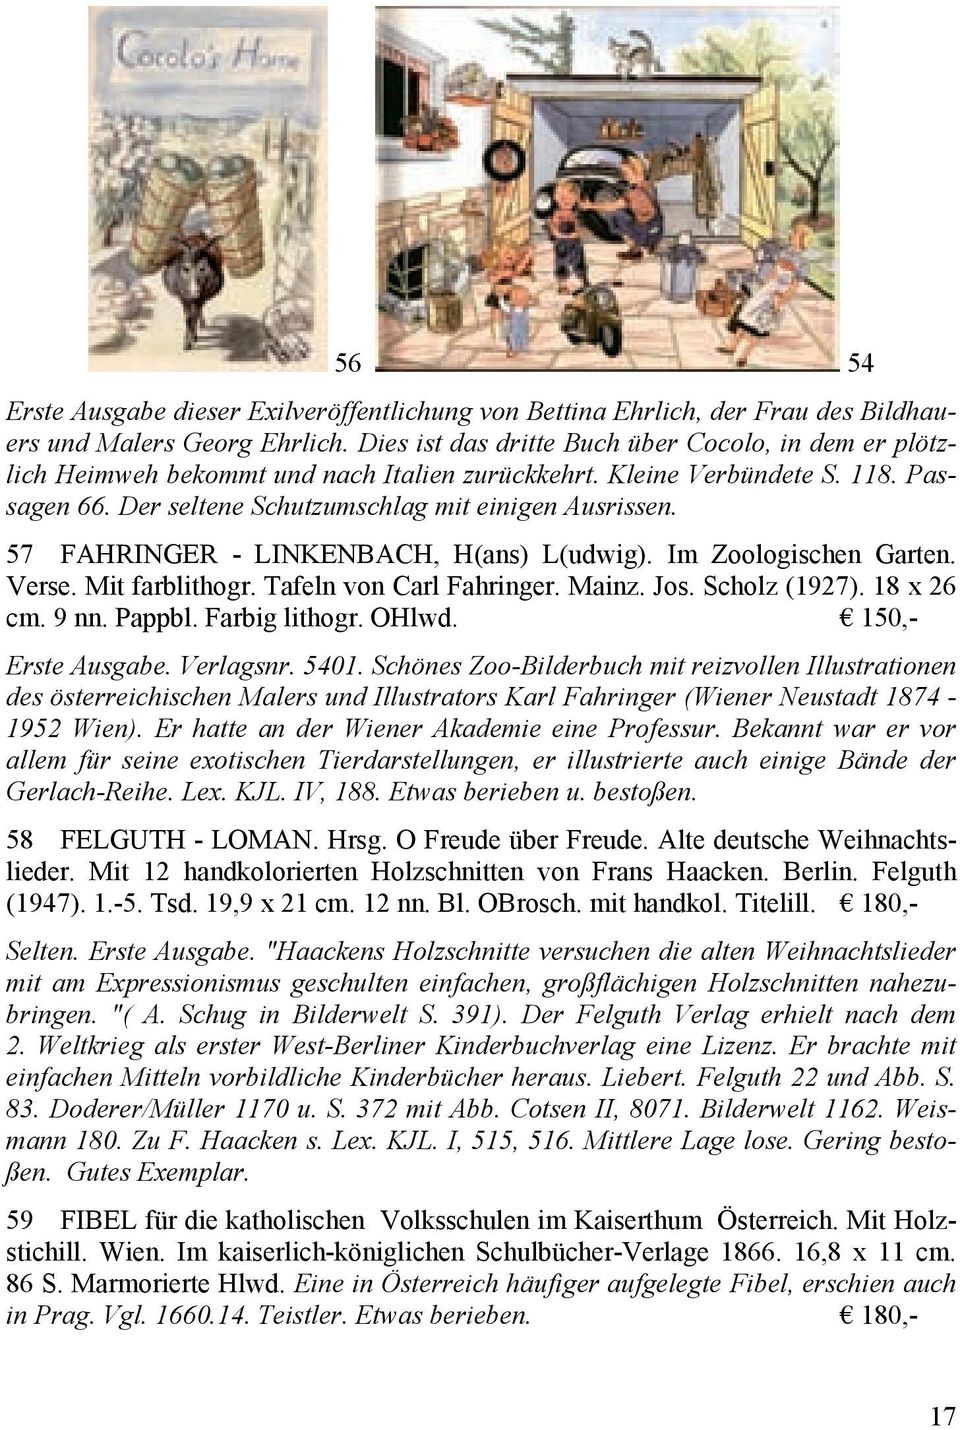 57 FAHRINGER - LINKENBACH, H(ans) L(udwig). Im Zoologischen Garten. Verse. Mit farblithogr. Tafeln von Carl Fahringer. Mainz. Jos. Scholz (1927). 18 x 26 cm. 9 nn. Pappbl. Farbig lithogr. OHlwd.